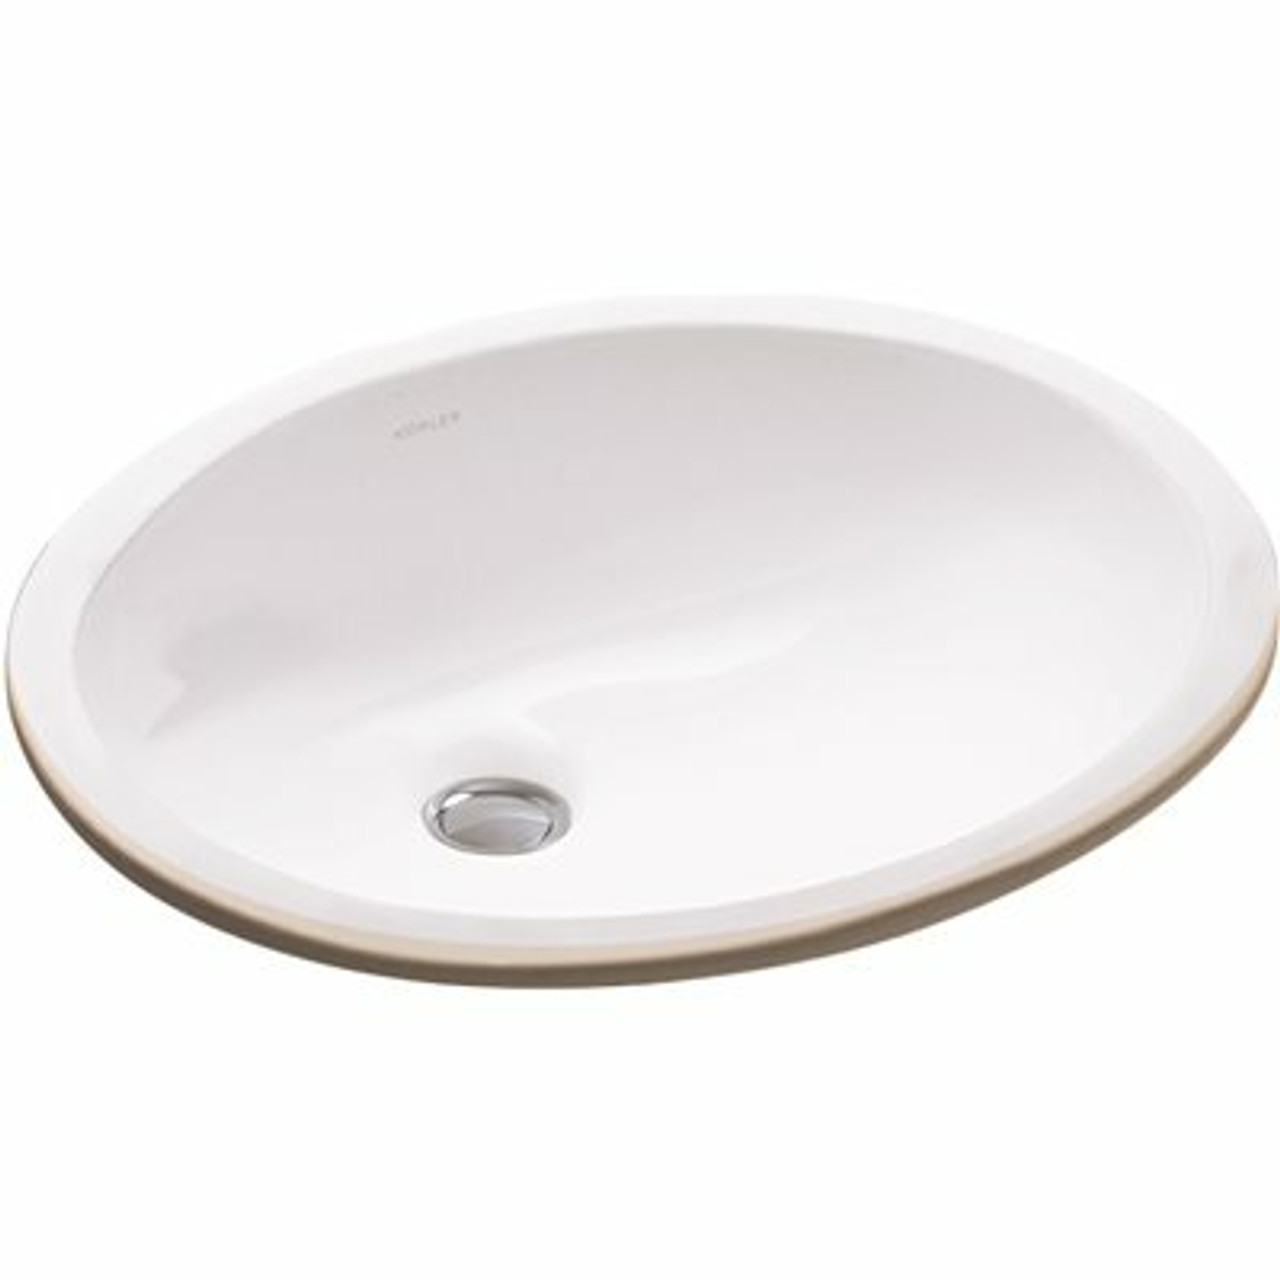 Kohler Caxton Vitreous China Undermount Bathroom Sink In White With Overflow Drain - 581246